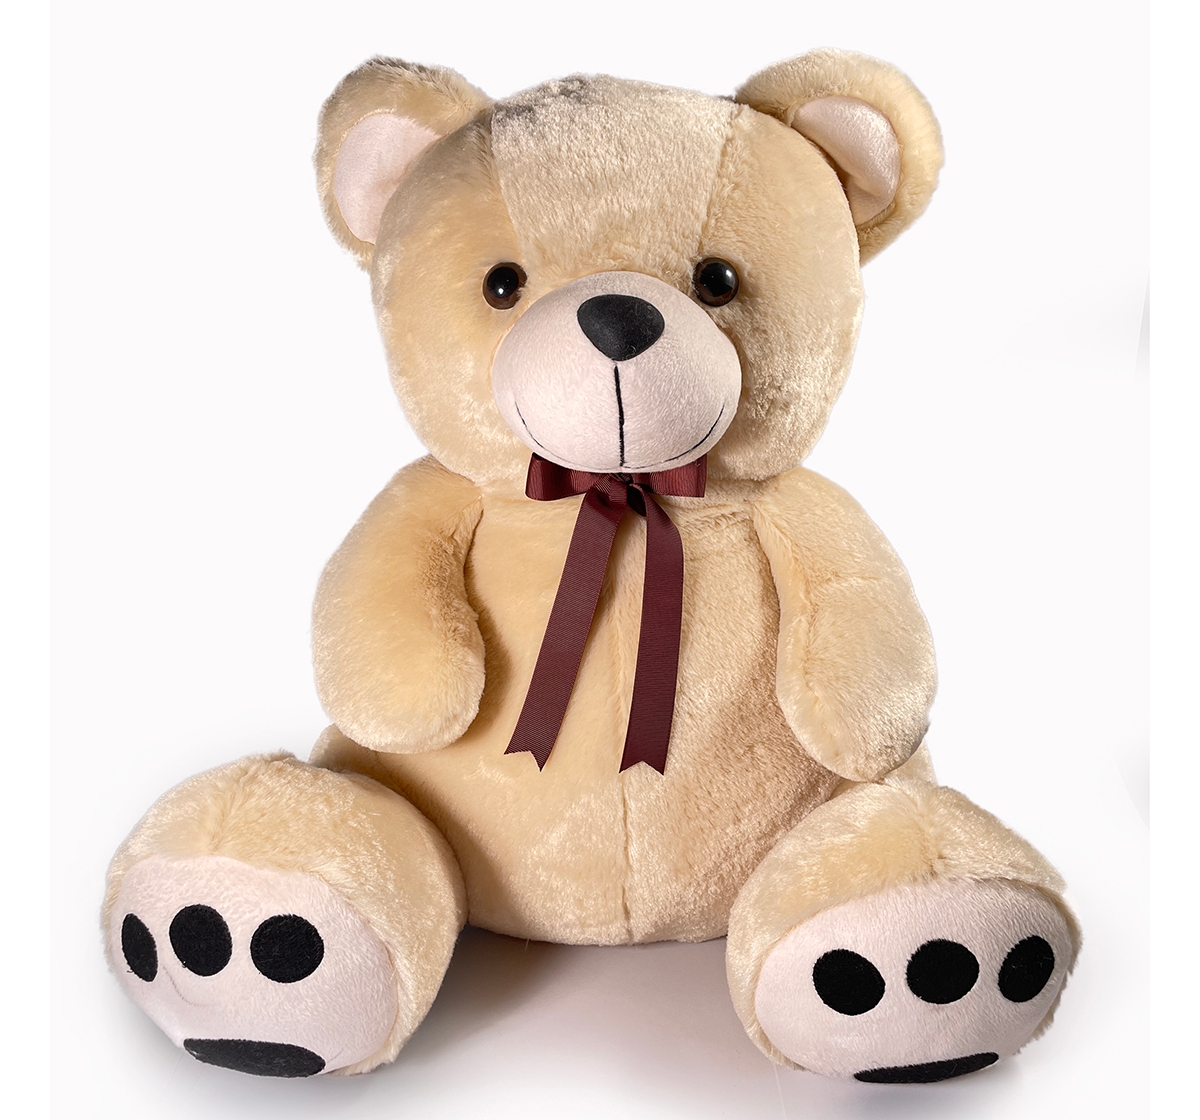 Mirada | Mirada 55cm jumbo teddy bear soft toy Multicolor 3Y+ 0